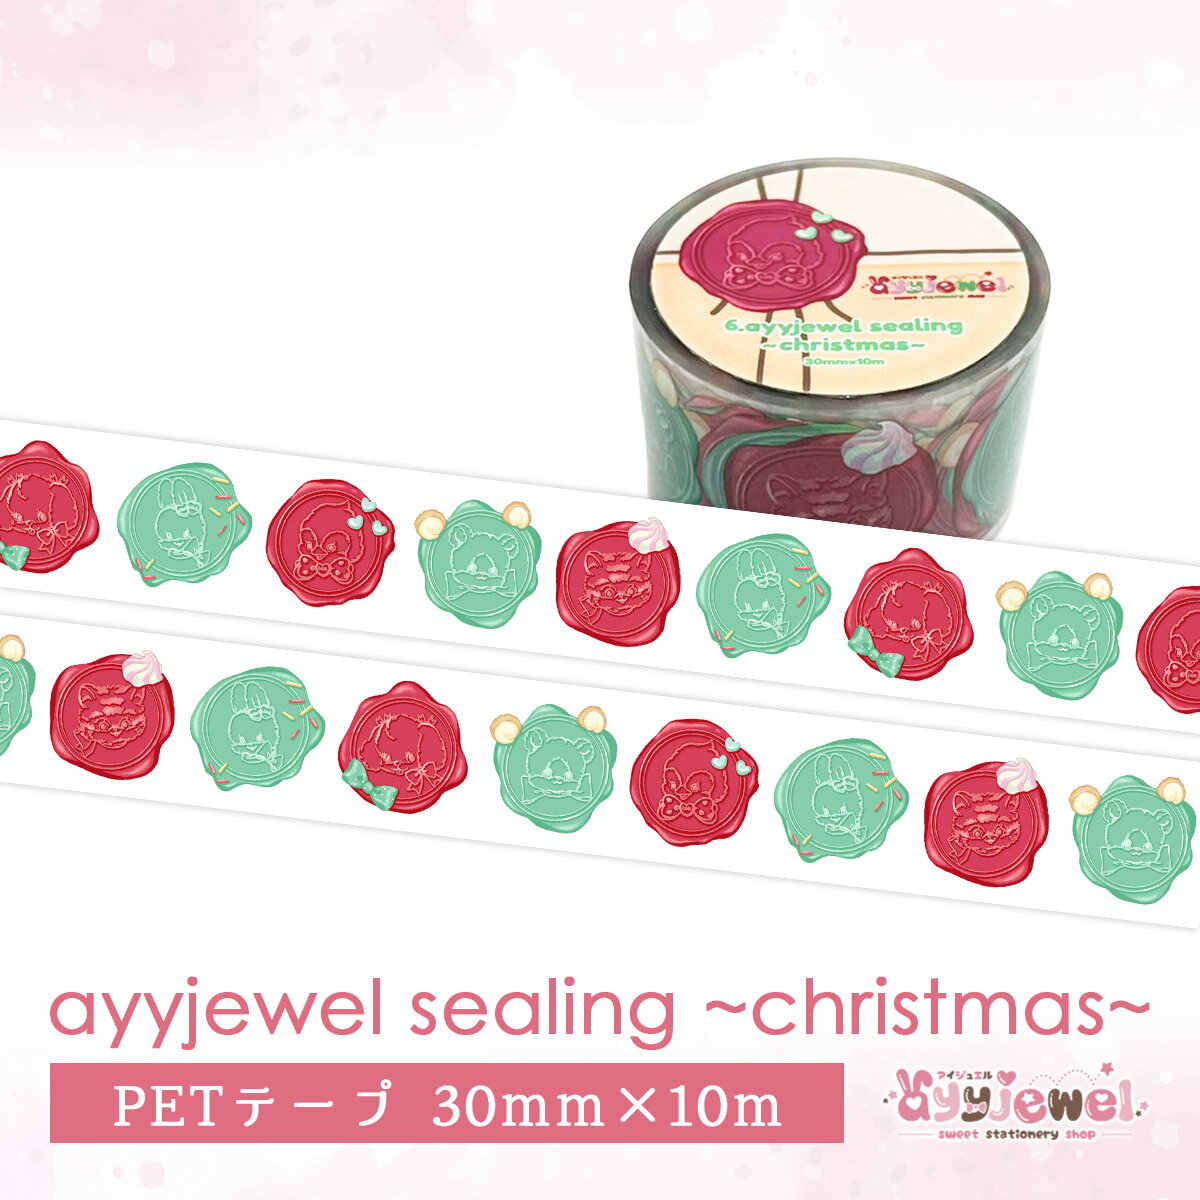 PETテープ6.ayyjewel sealing ~christmas~ シーリング クリスマス ゆめかわ ゆめかわいい 文具 文具女子 レトロアニマル ayyjewel アイジュエル 商用利用可